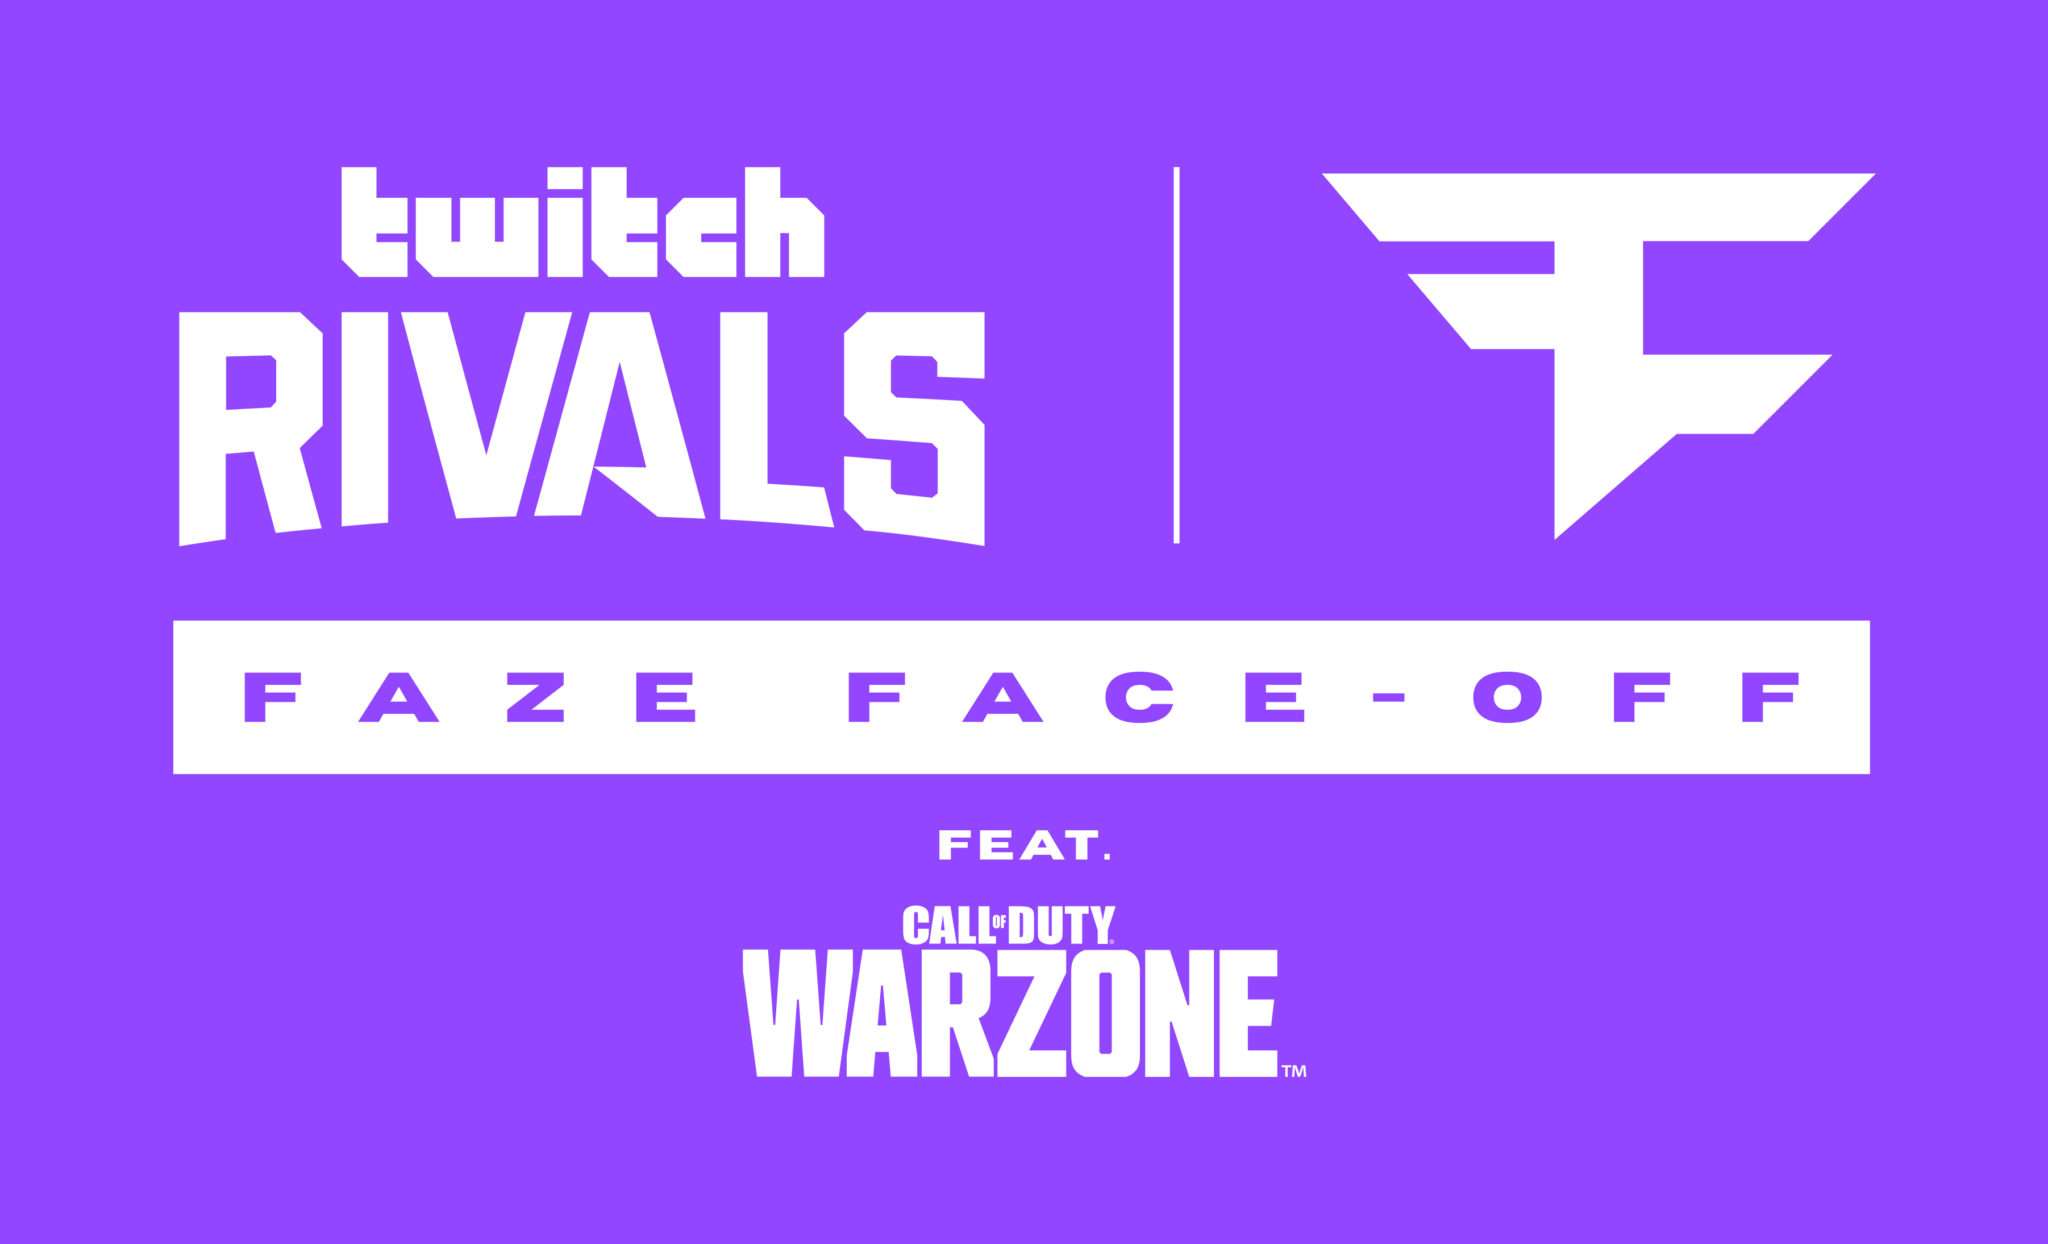 Warzone Twitch Rivals FaZe event.